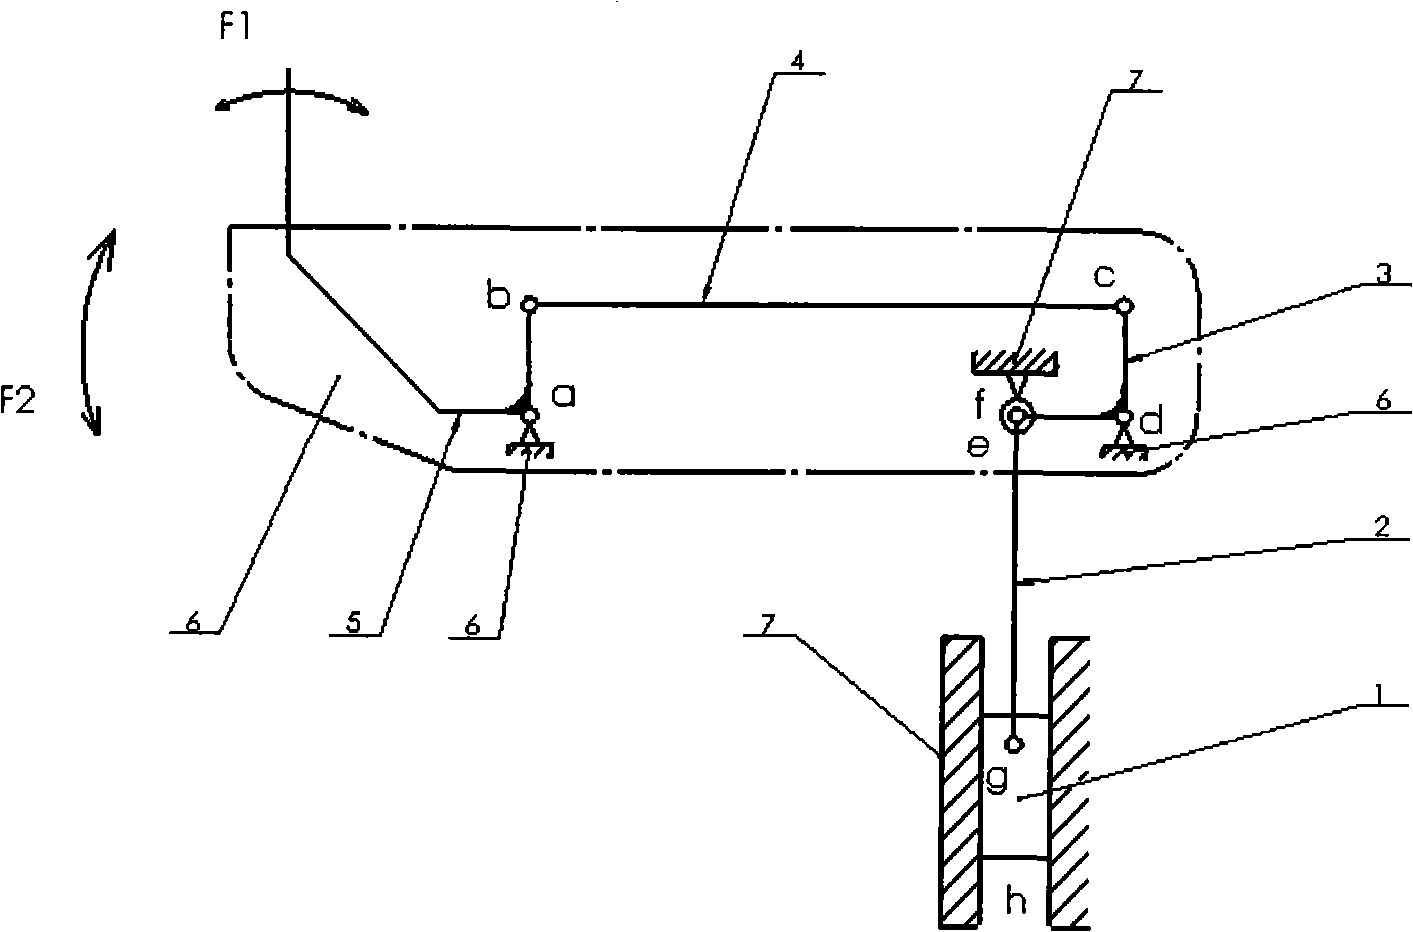 Multi-way valve operation mechanism for fork lift